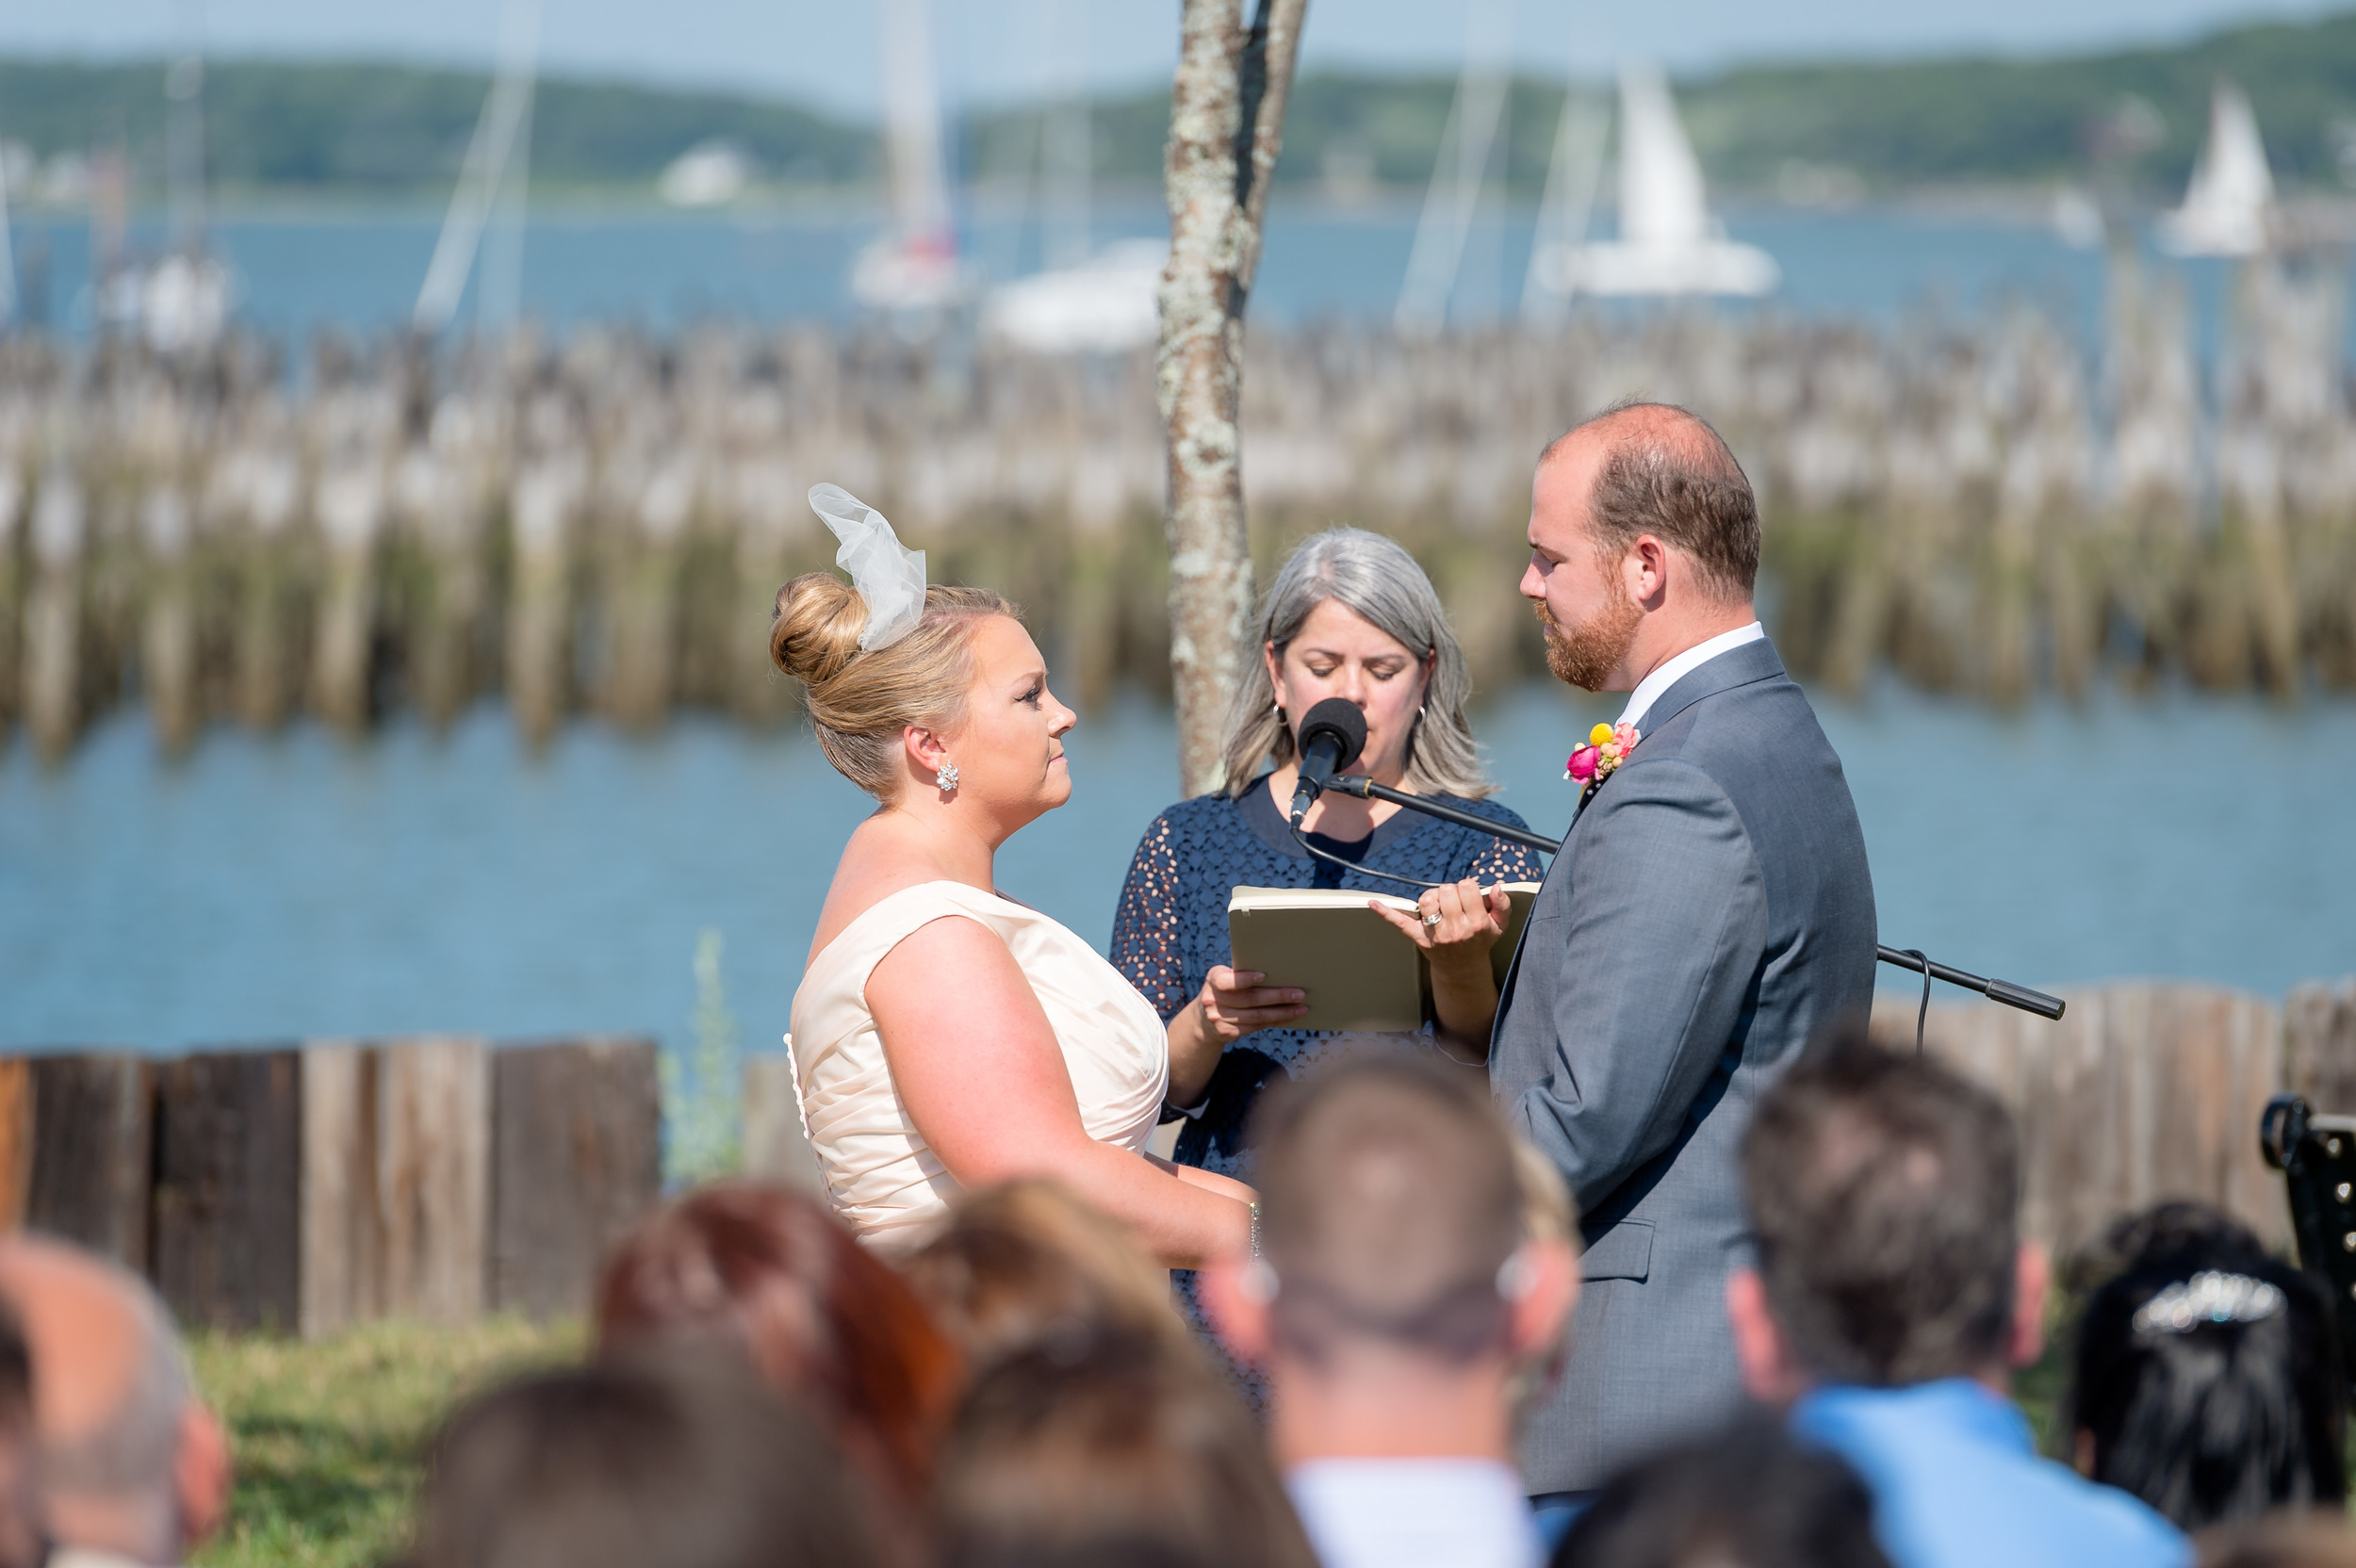 Portland Maine wedding officiant